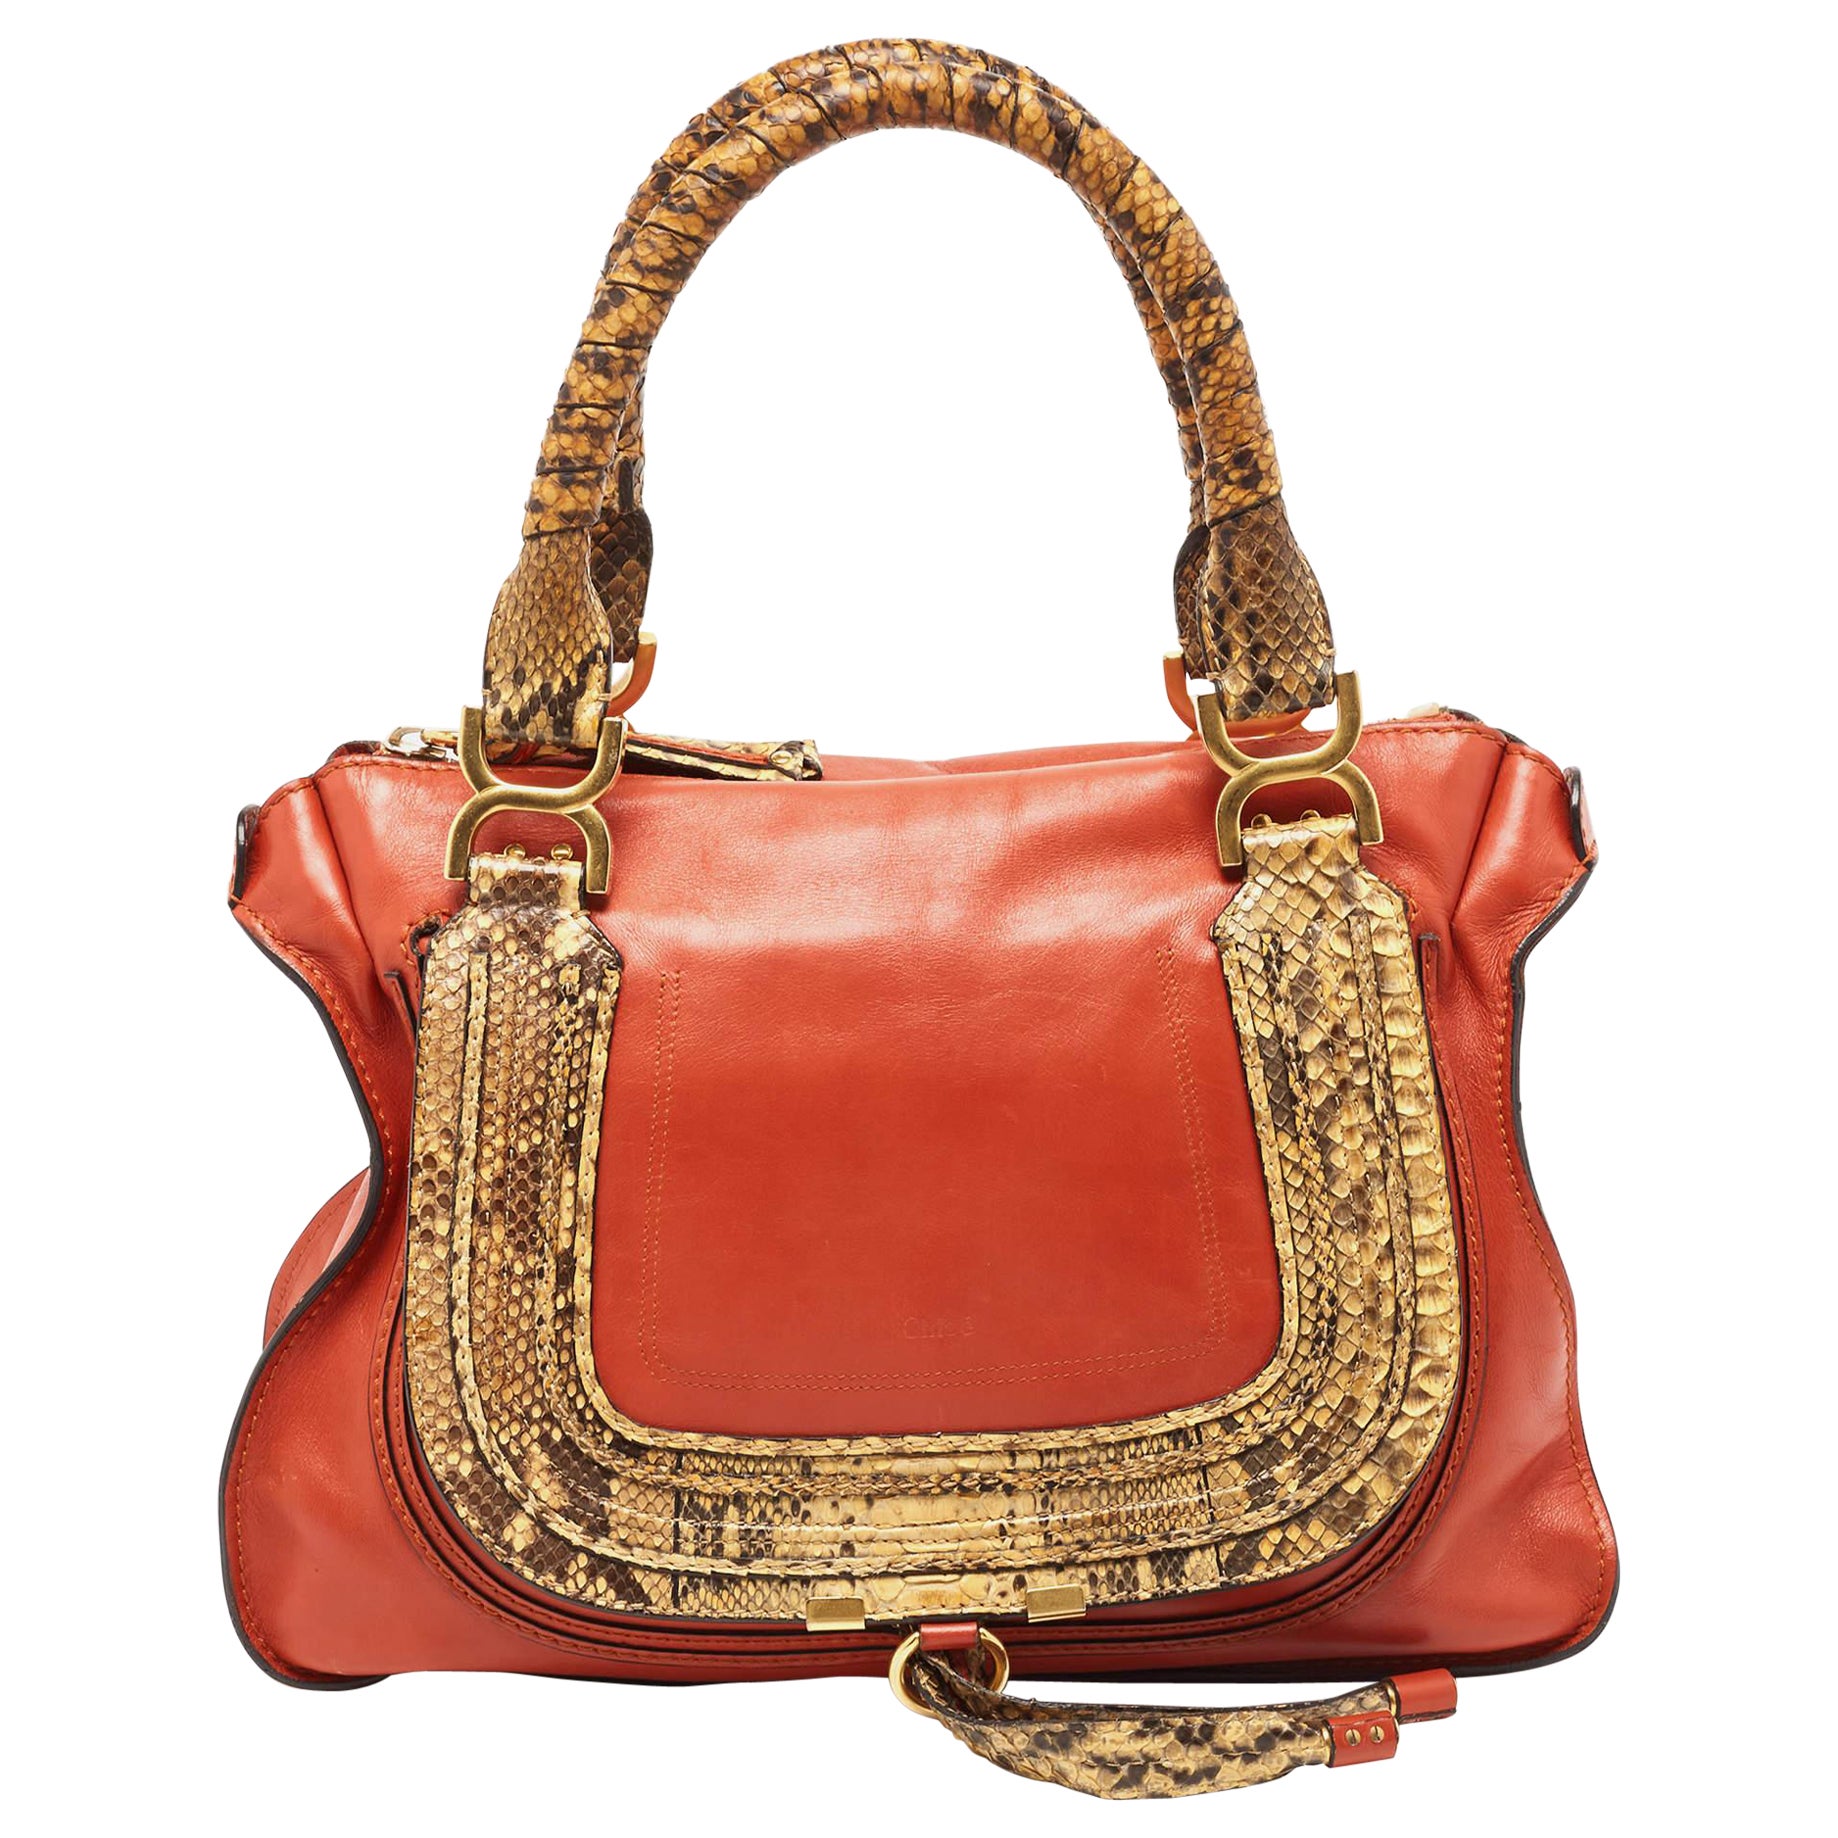 Chloe Tan/Beige Python And Leather Marcie Shoulder Bag For Sale